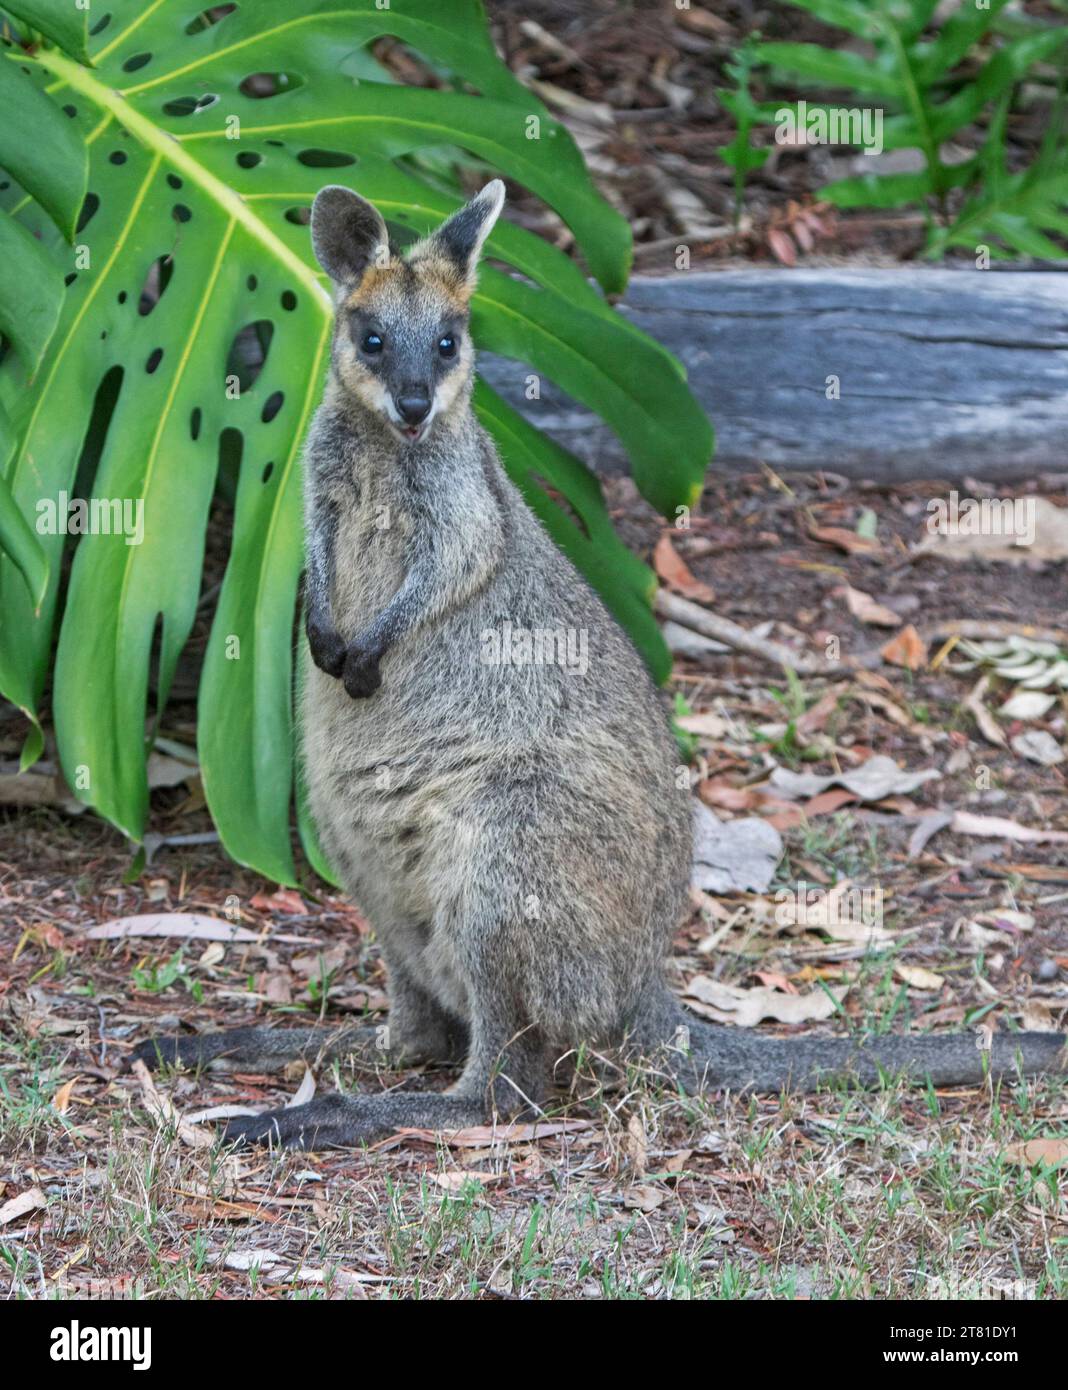 Swamp wallaby, Wallabia bicolour, a wild Australian marsupial in a rural garden, looking directly at camera, Stock Photo